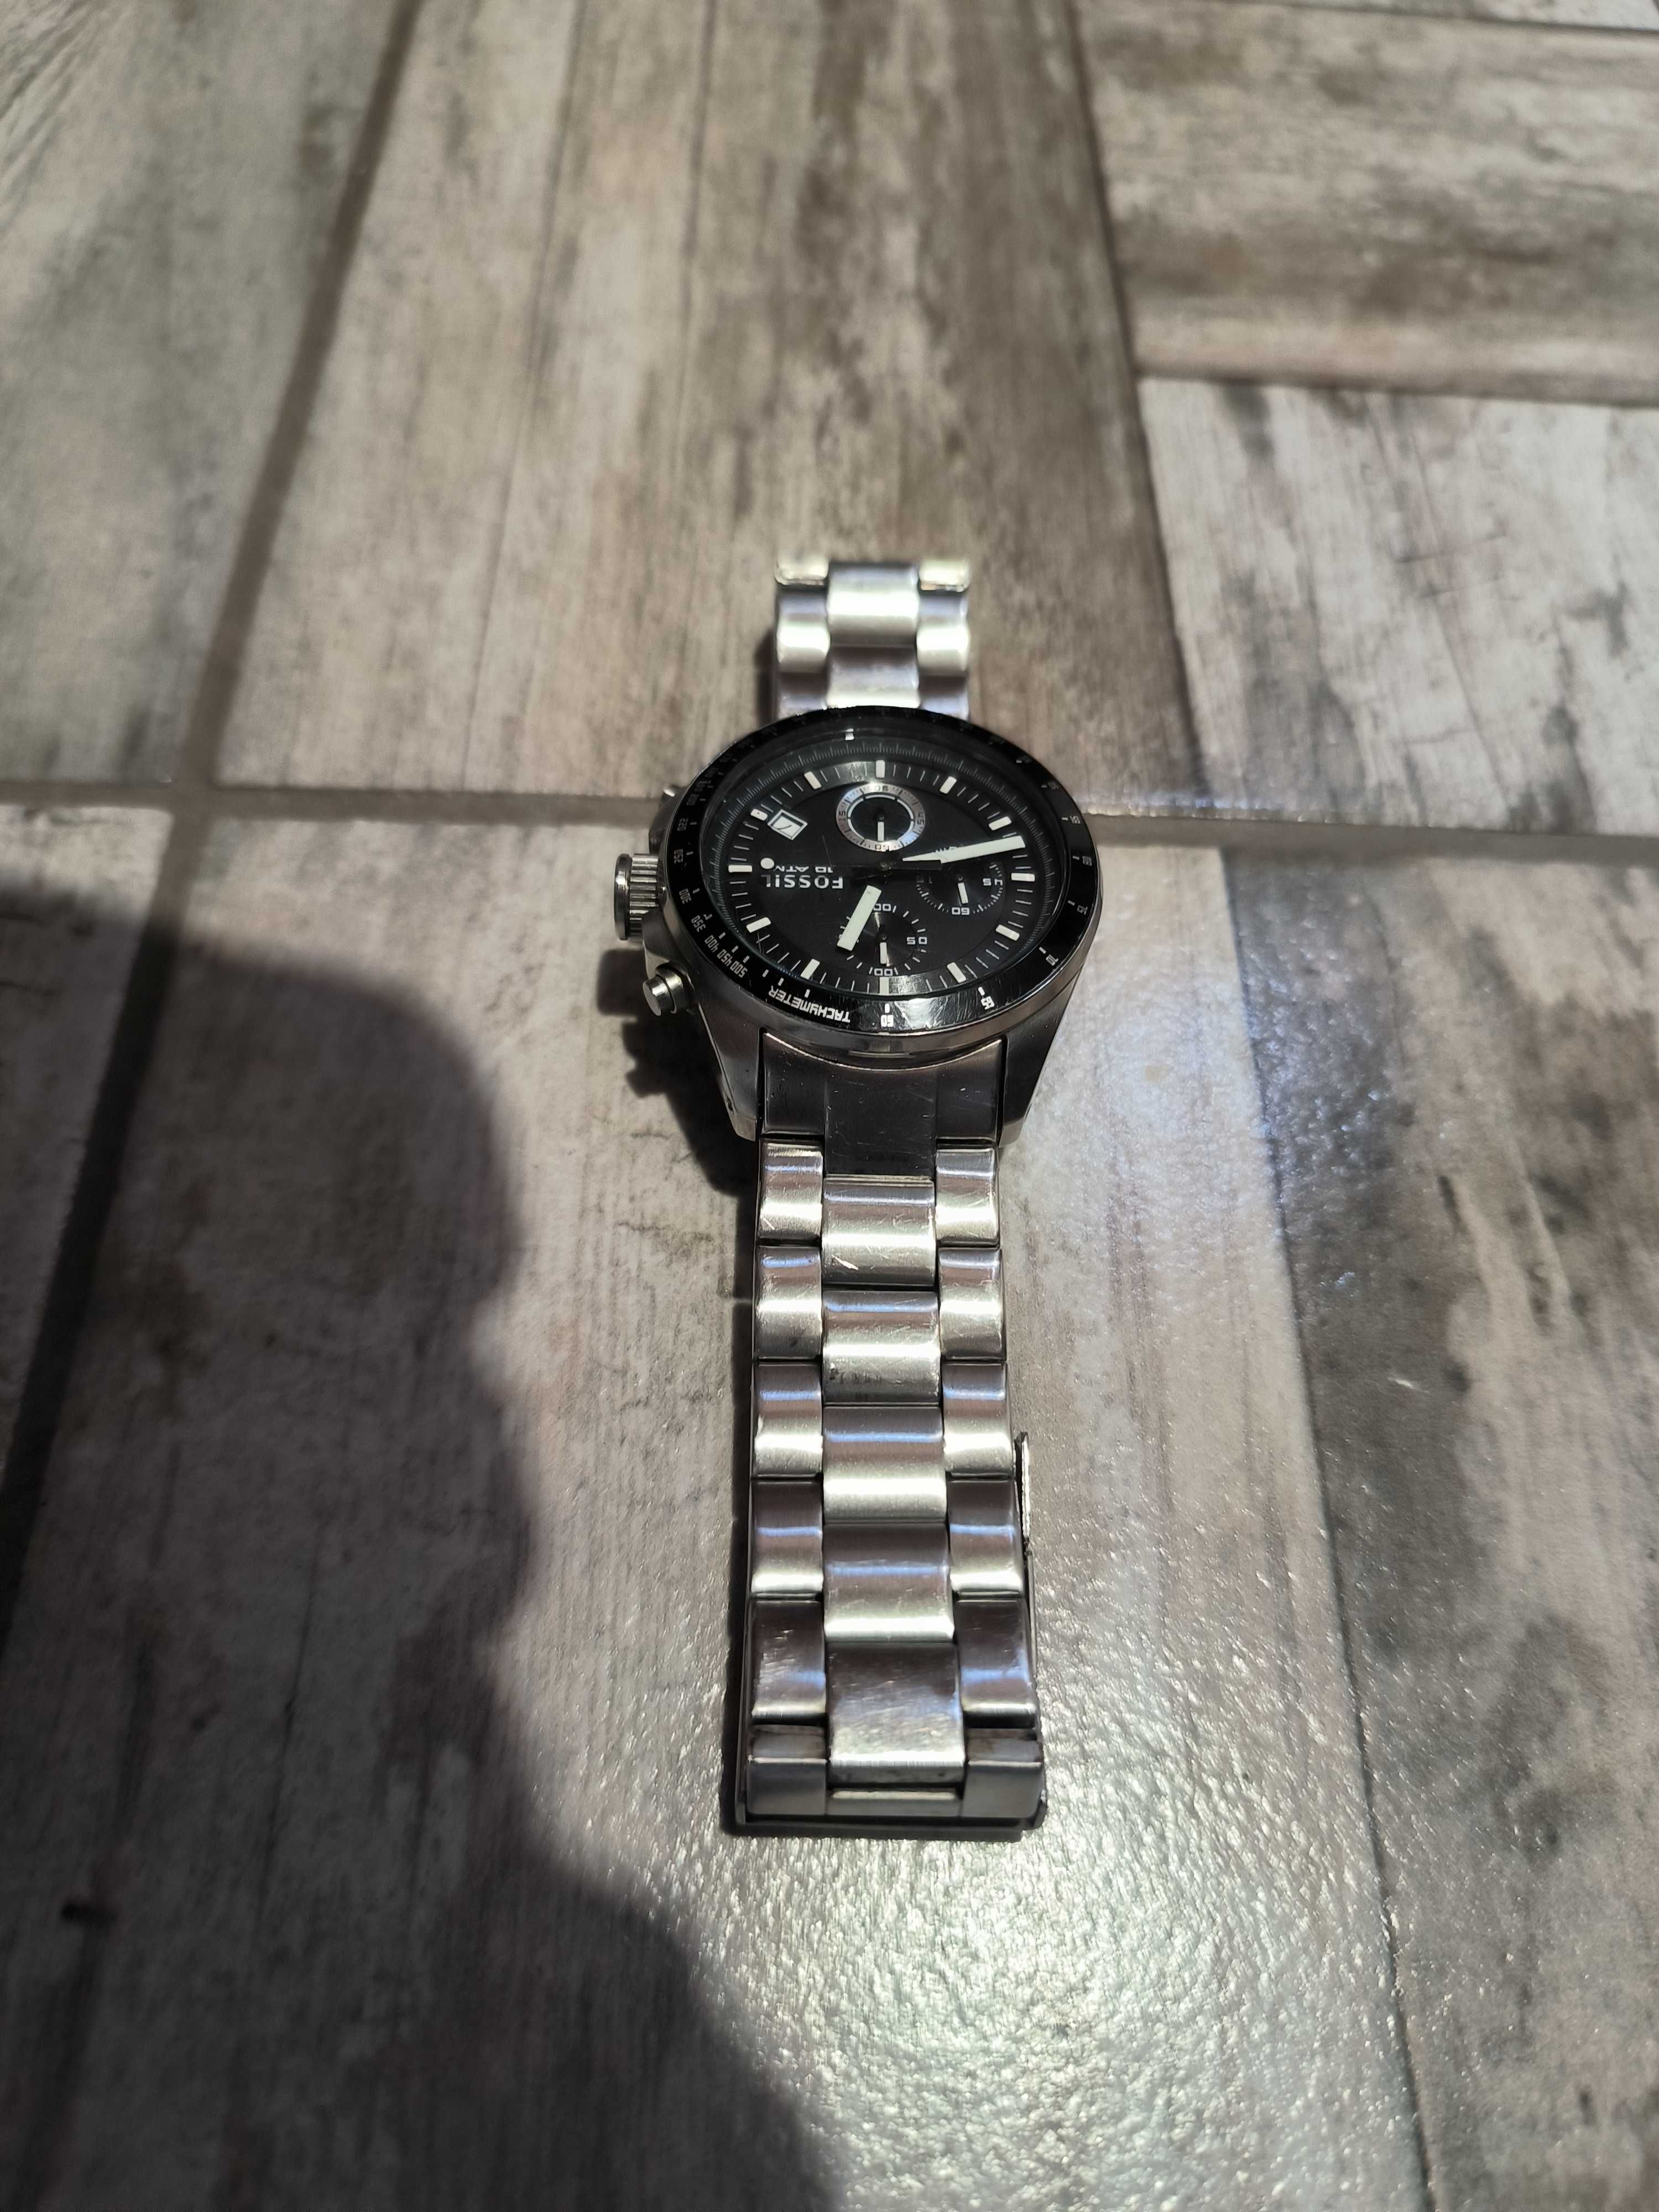 Fossil елегантен мъжки часовник - Decker Chronograph, модел CH2600